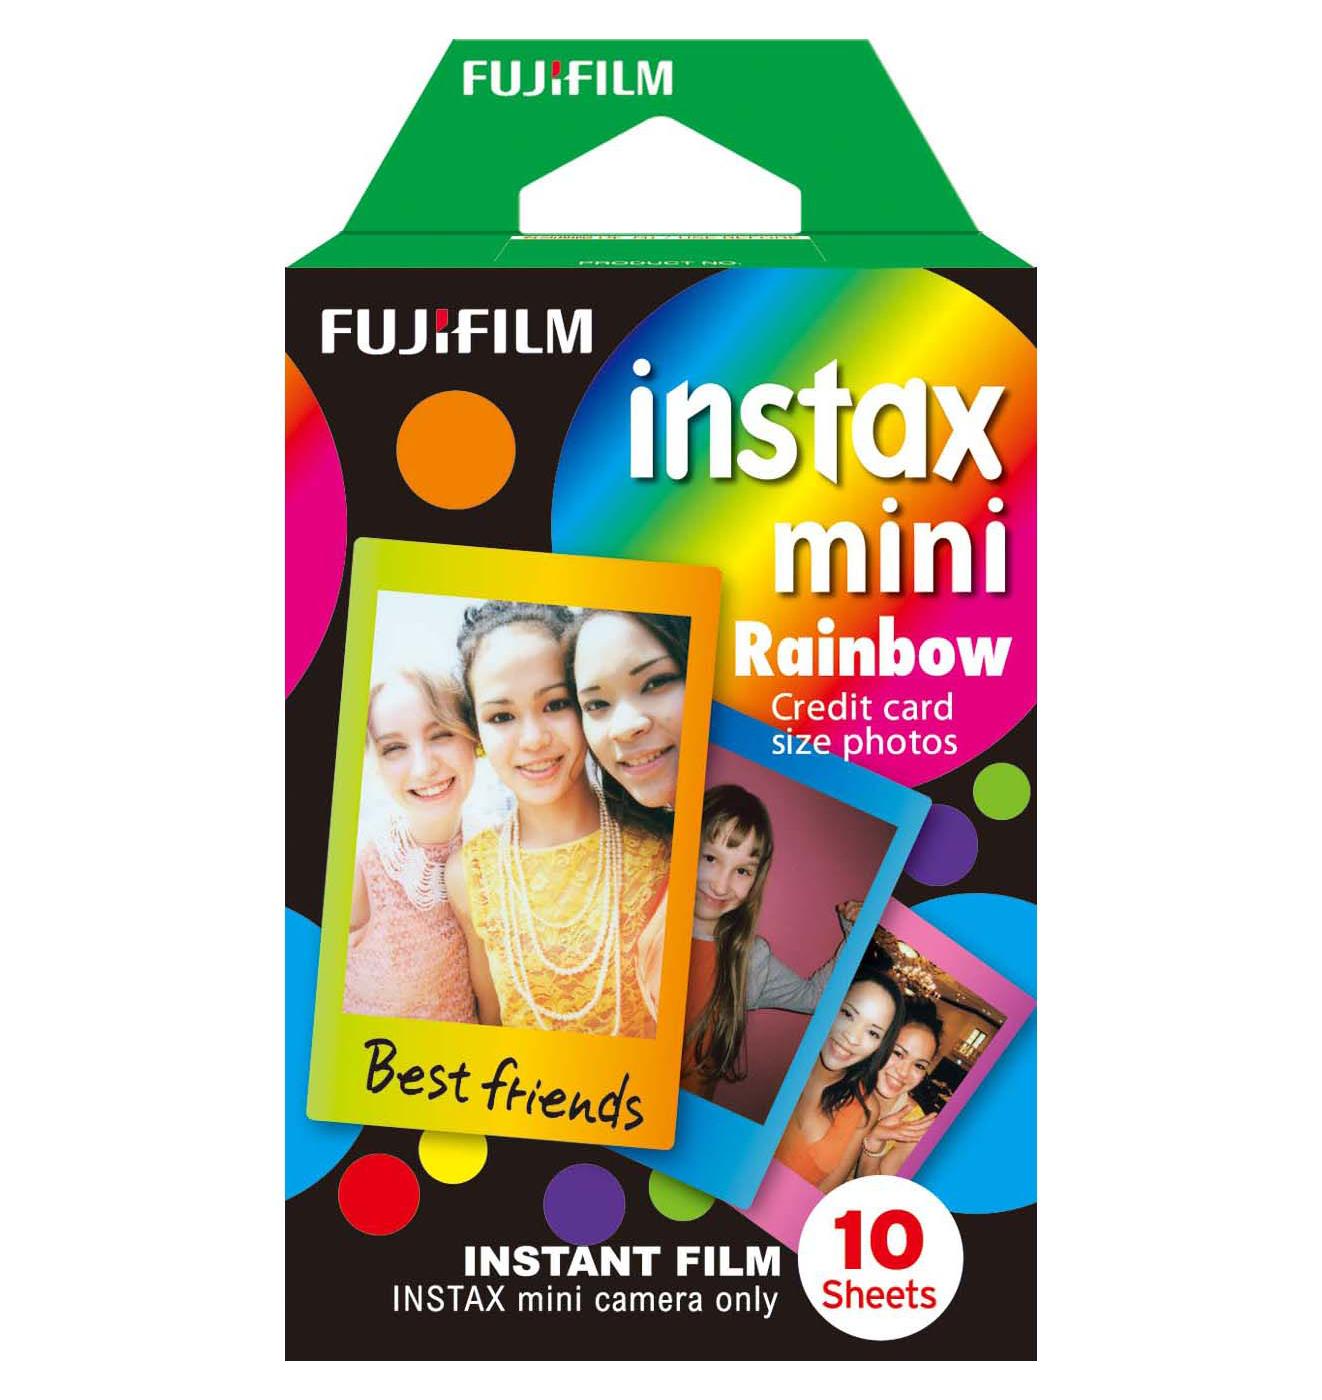 Fujifilm Instax Mini Variety Pack Film - Shop Camera Accessories at H-E-B